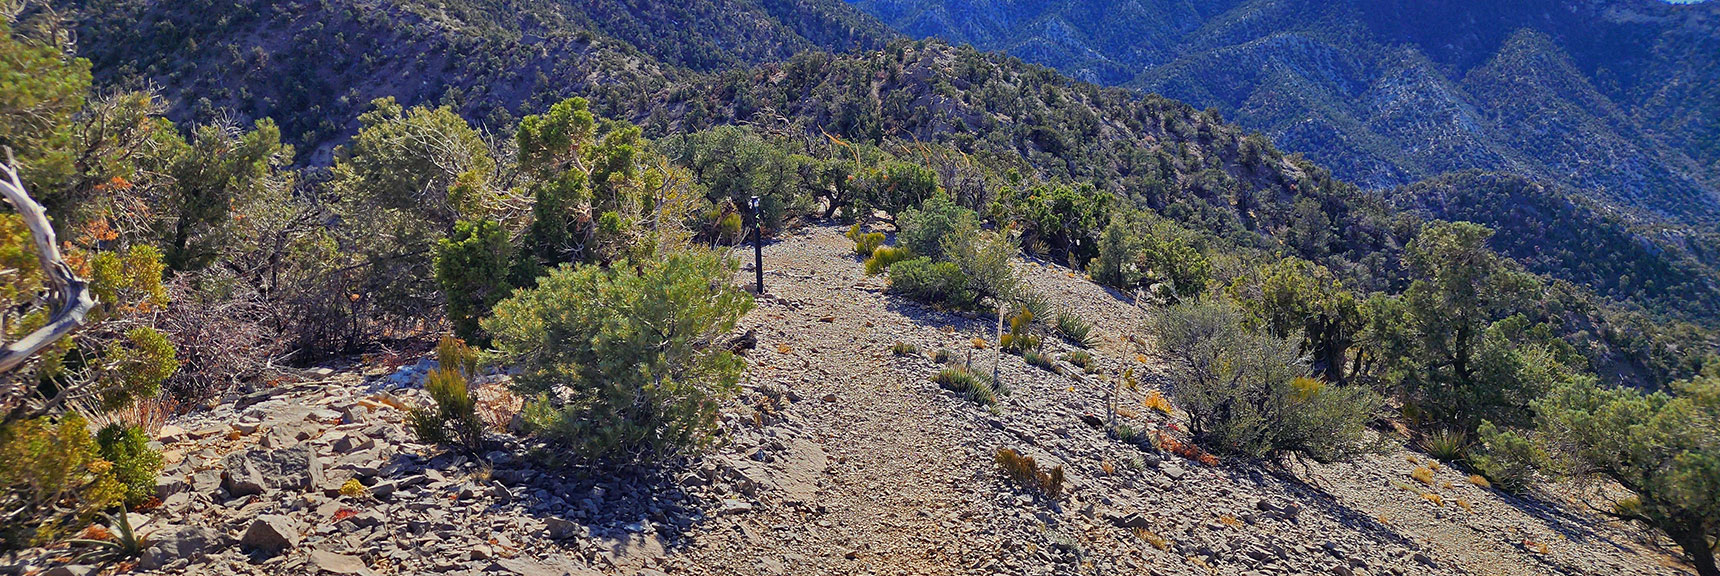 Trail Junction: Left to Bridge Mountain, Right to Rocky Gap Road | North Upper Crest Ridgeline | Rainbow Mountain Wilderness, Nevada